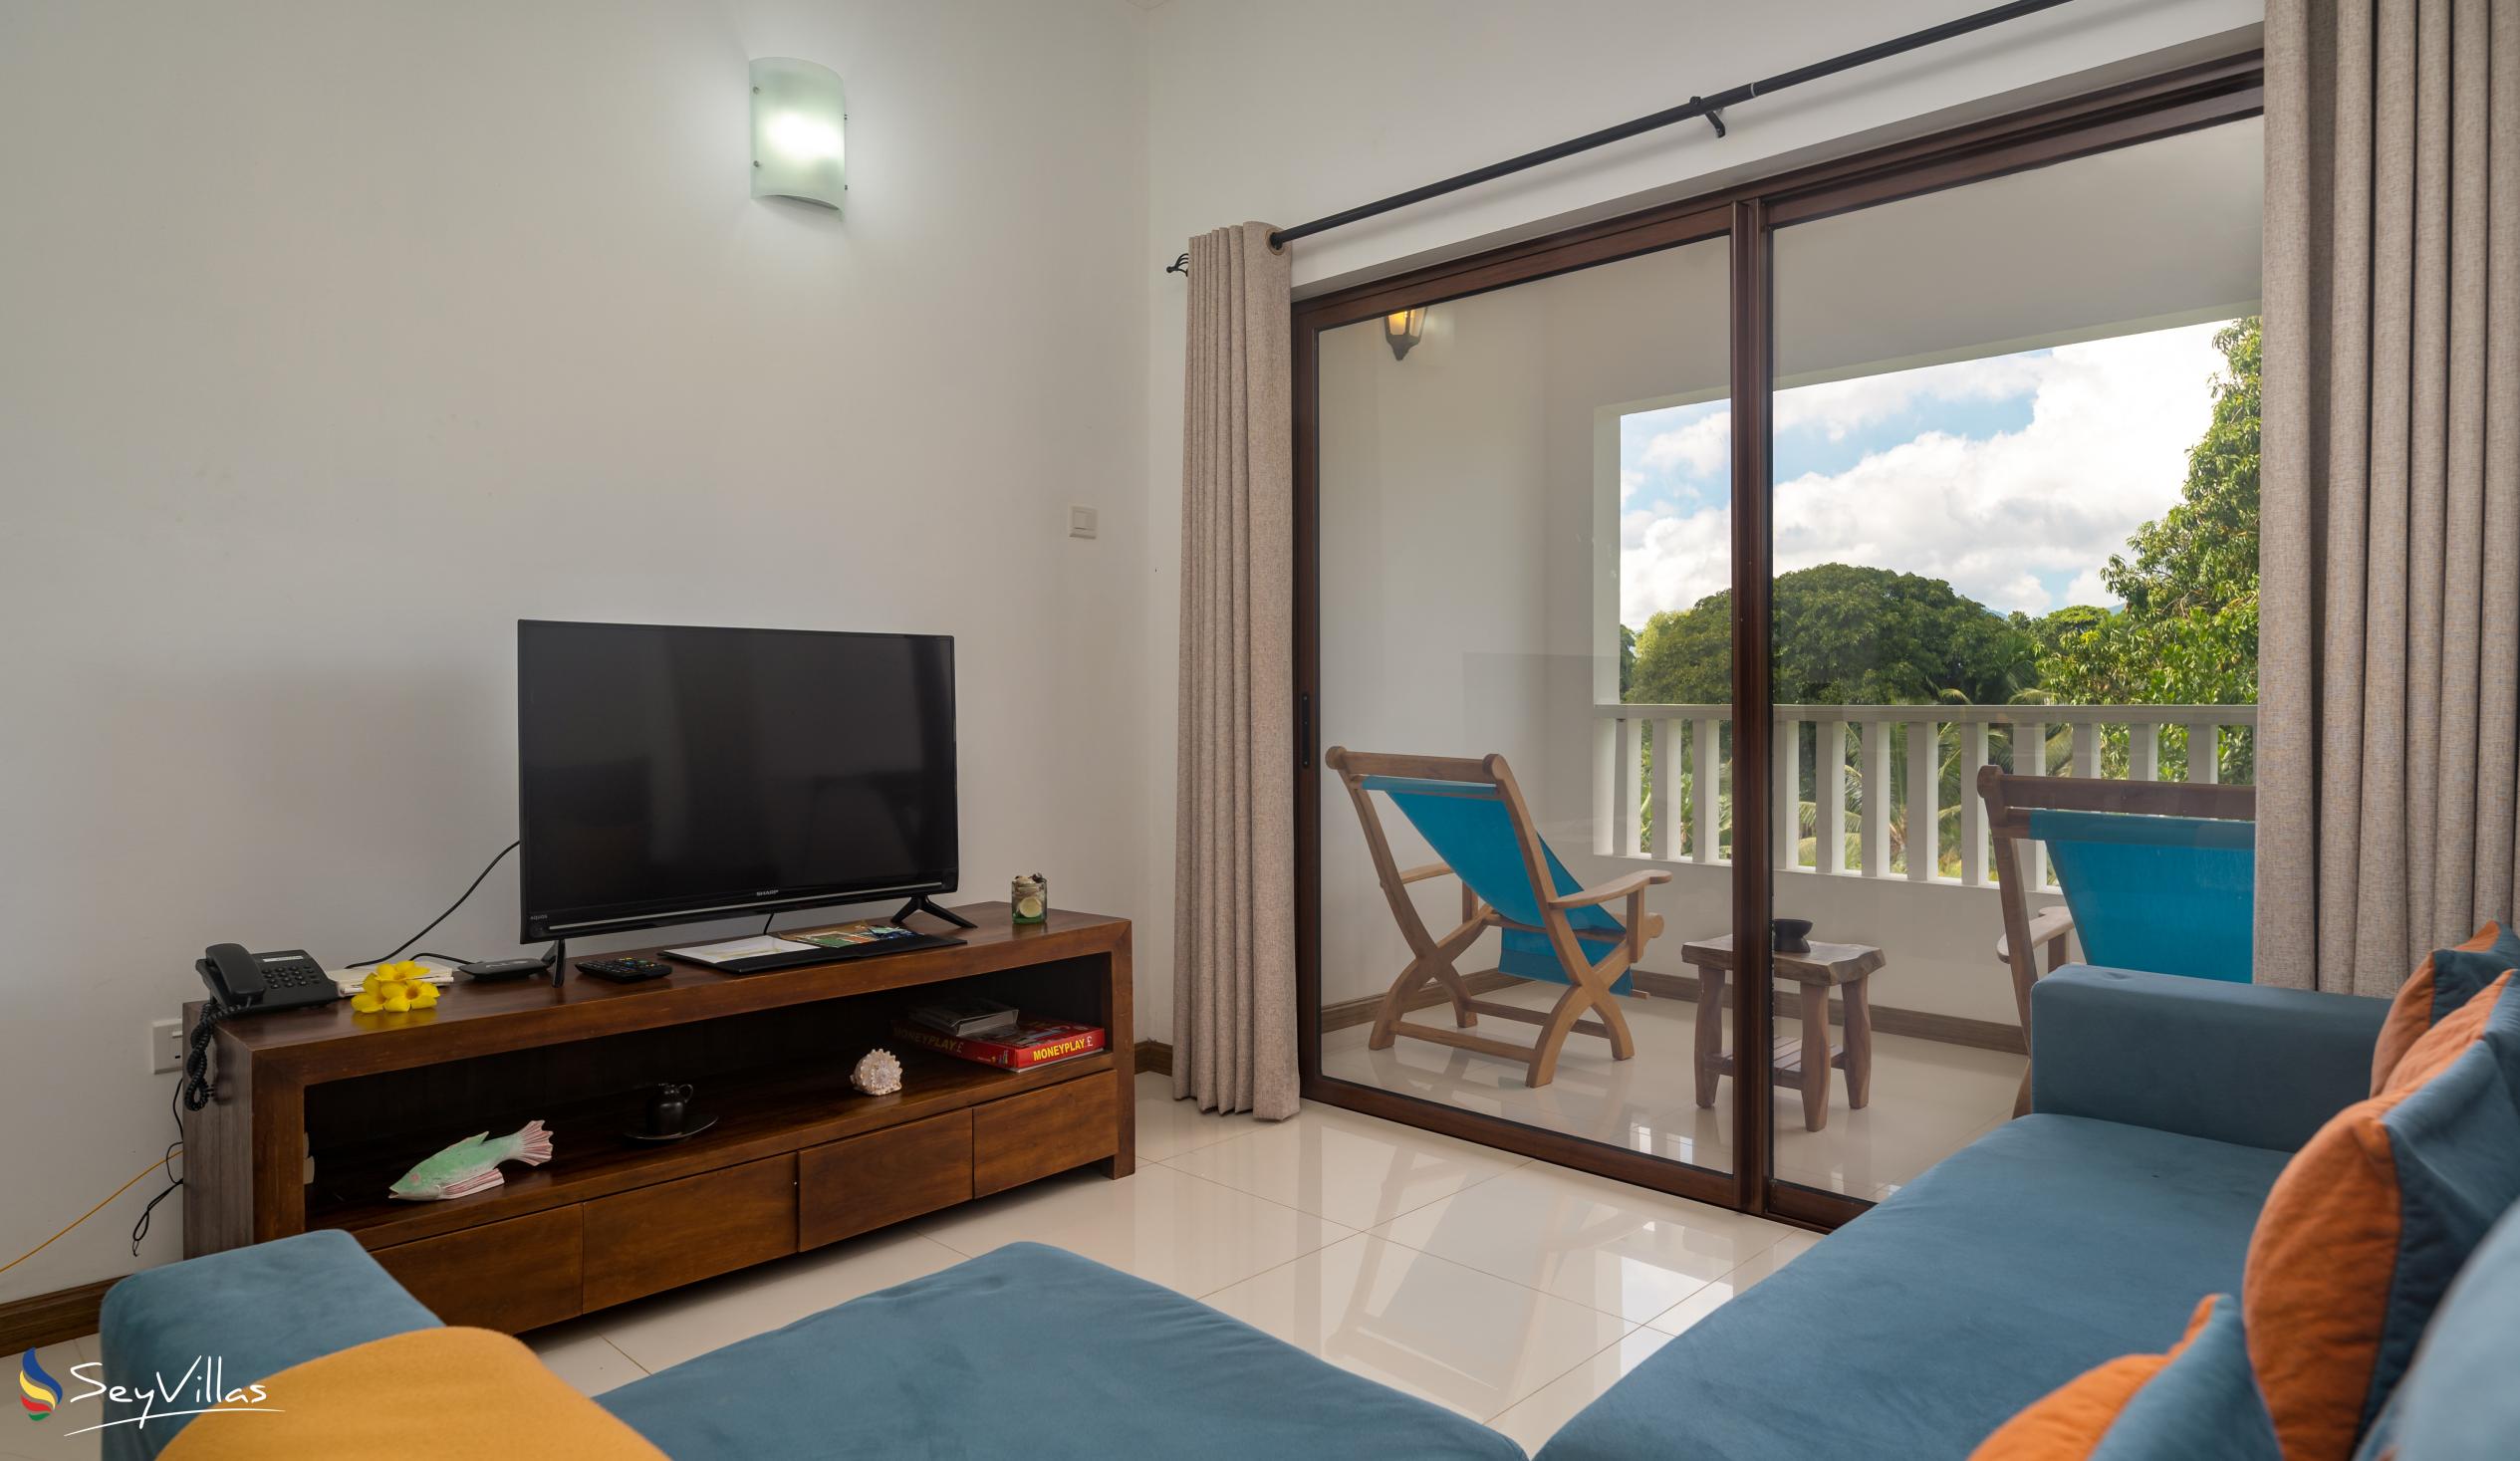 Photo 67: Kanasuk Self Catering Apartments - 1-Bedroom Apartment Tamarin - Mahé (Seychelles)